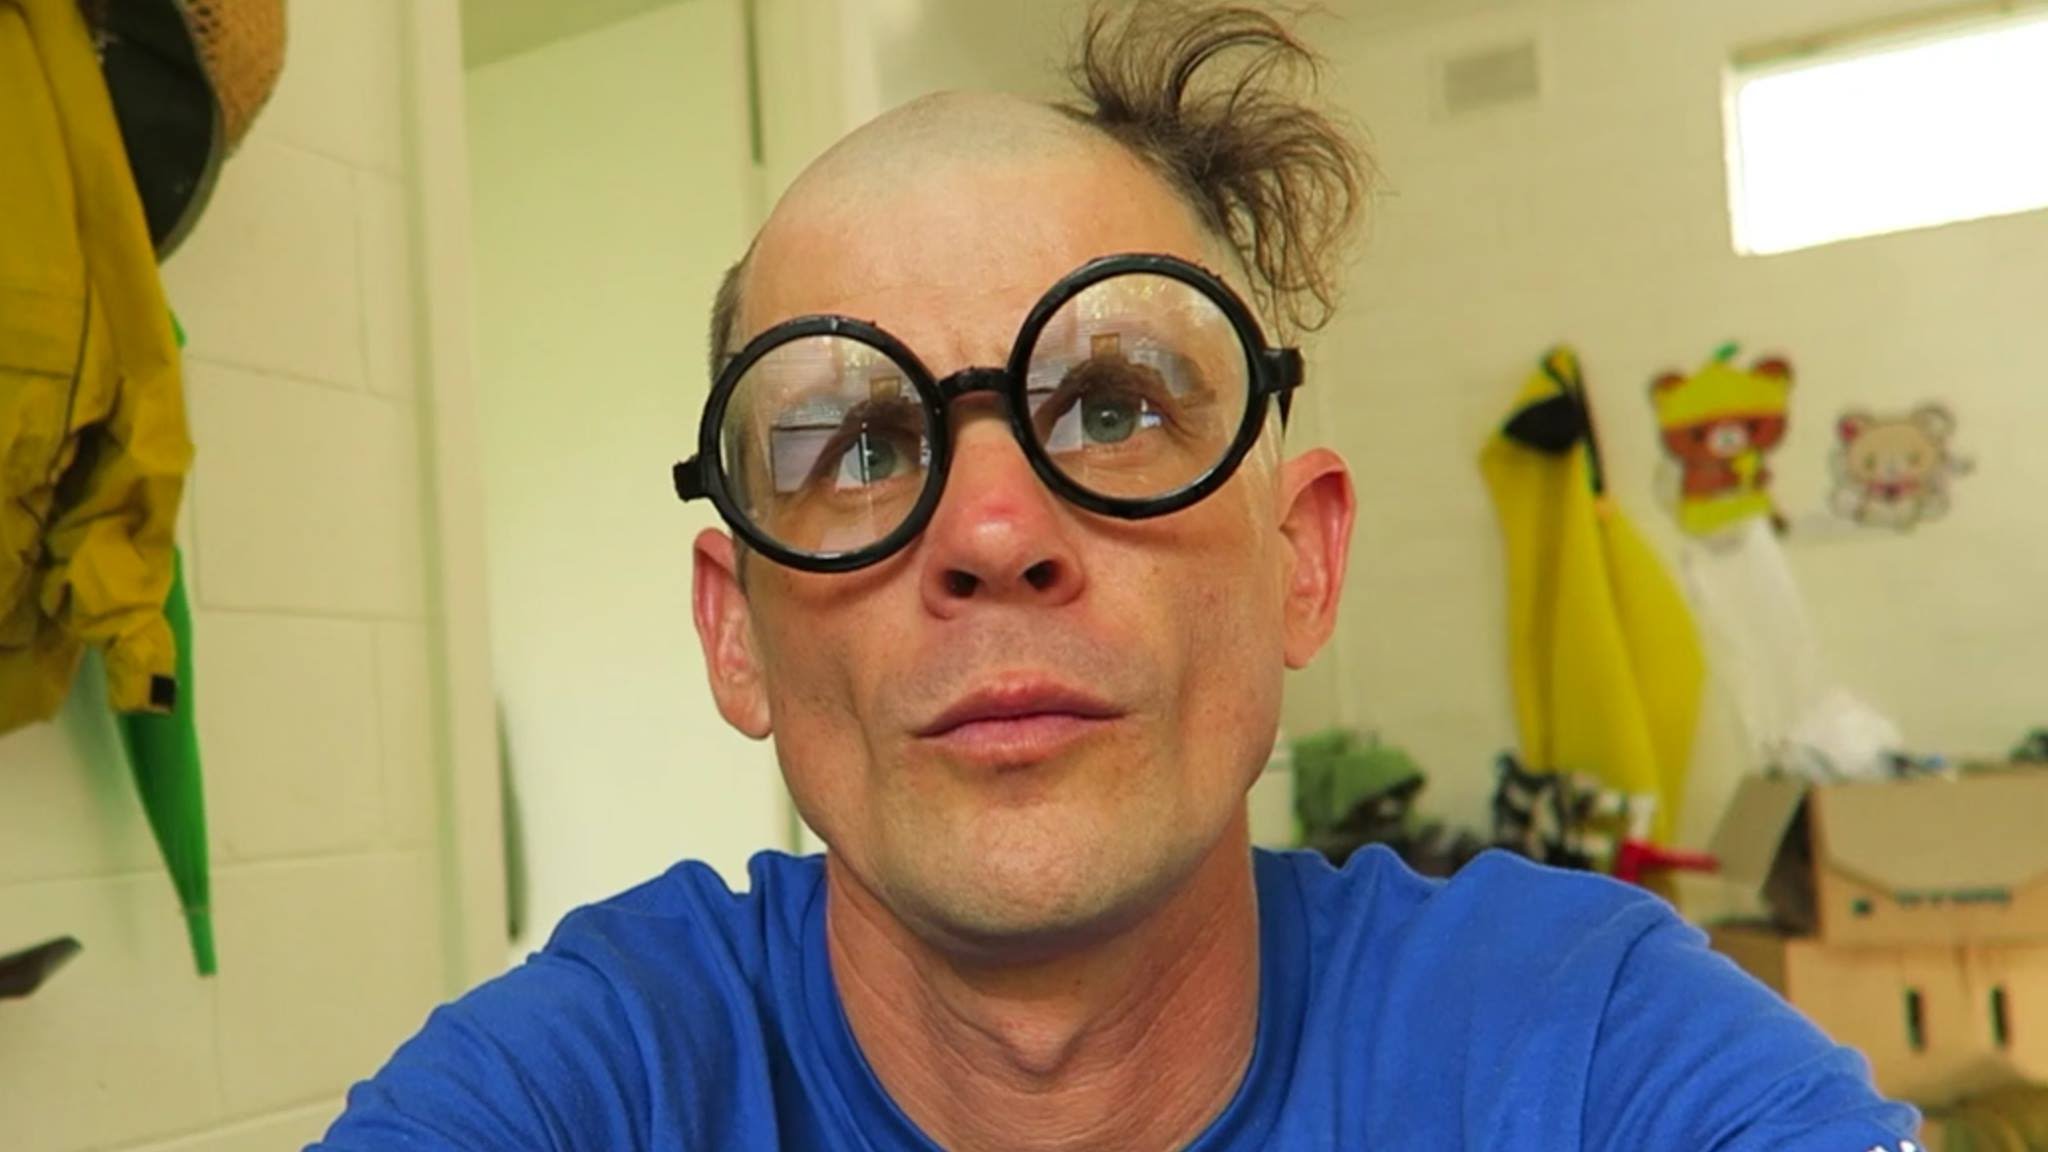 johnstone-clown-glasses-and-haircut